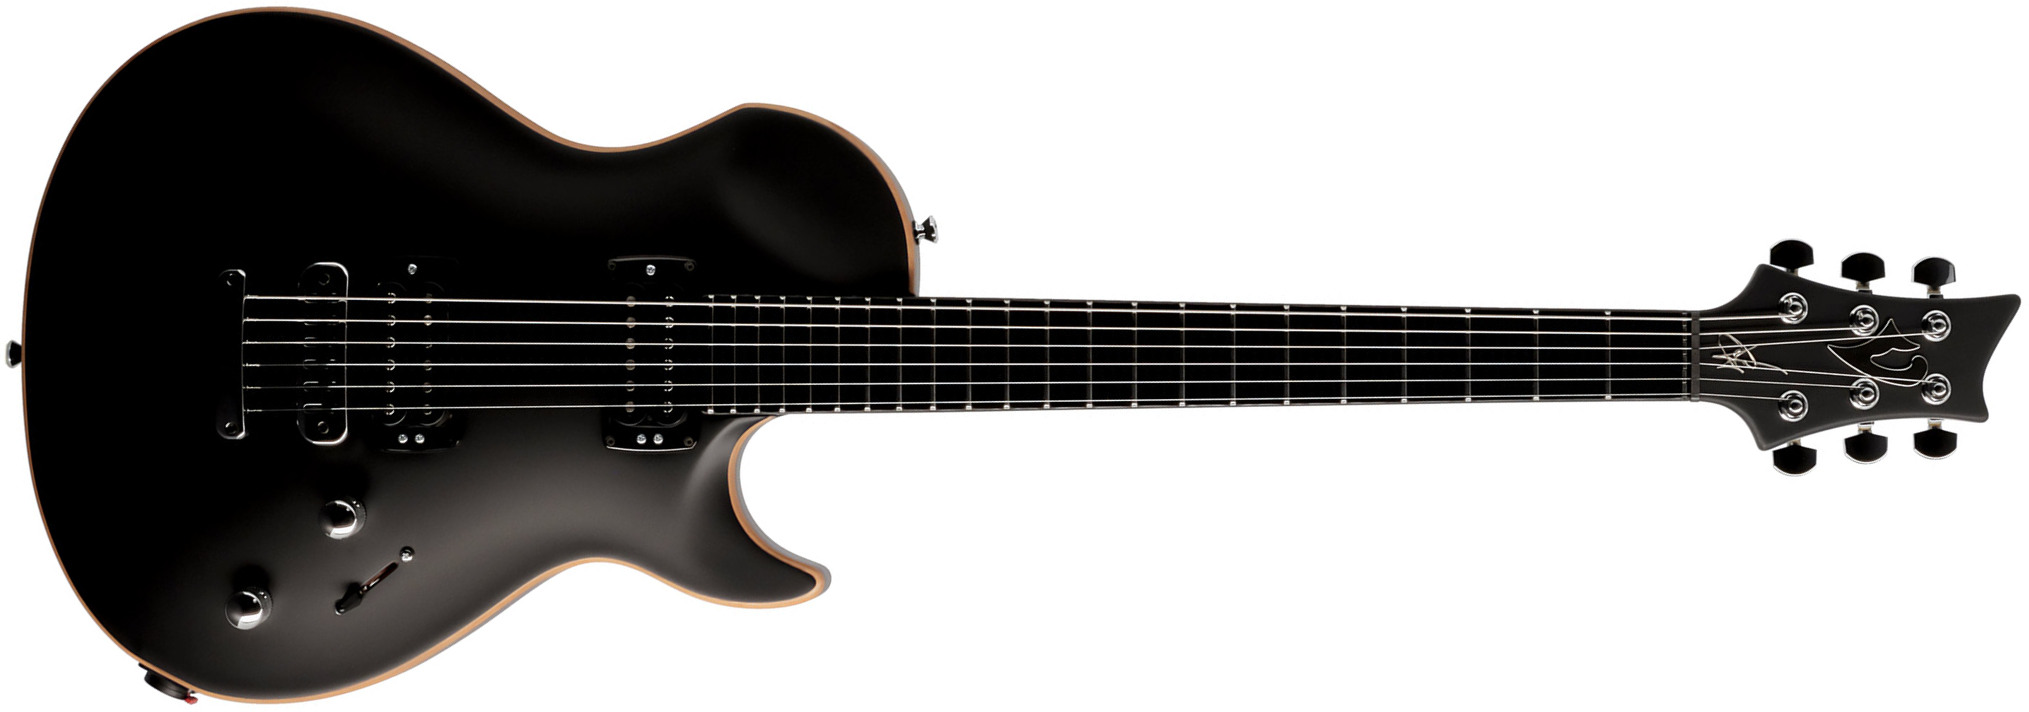 Vigier G.v. Rock 2h Ht Phe - Black Matte - Single cut electric guitar - Main picture